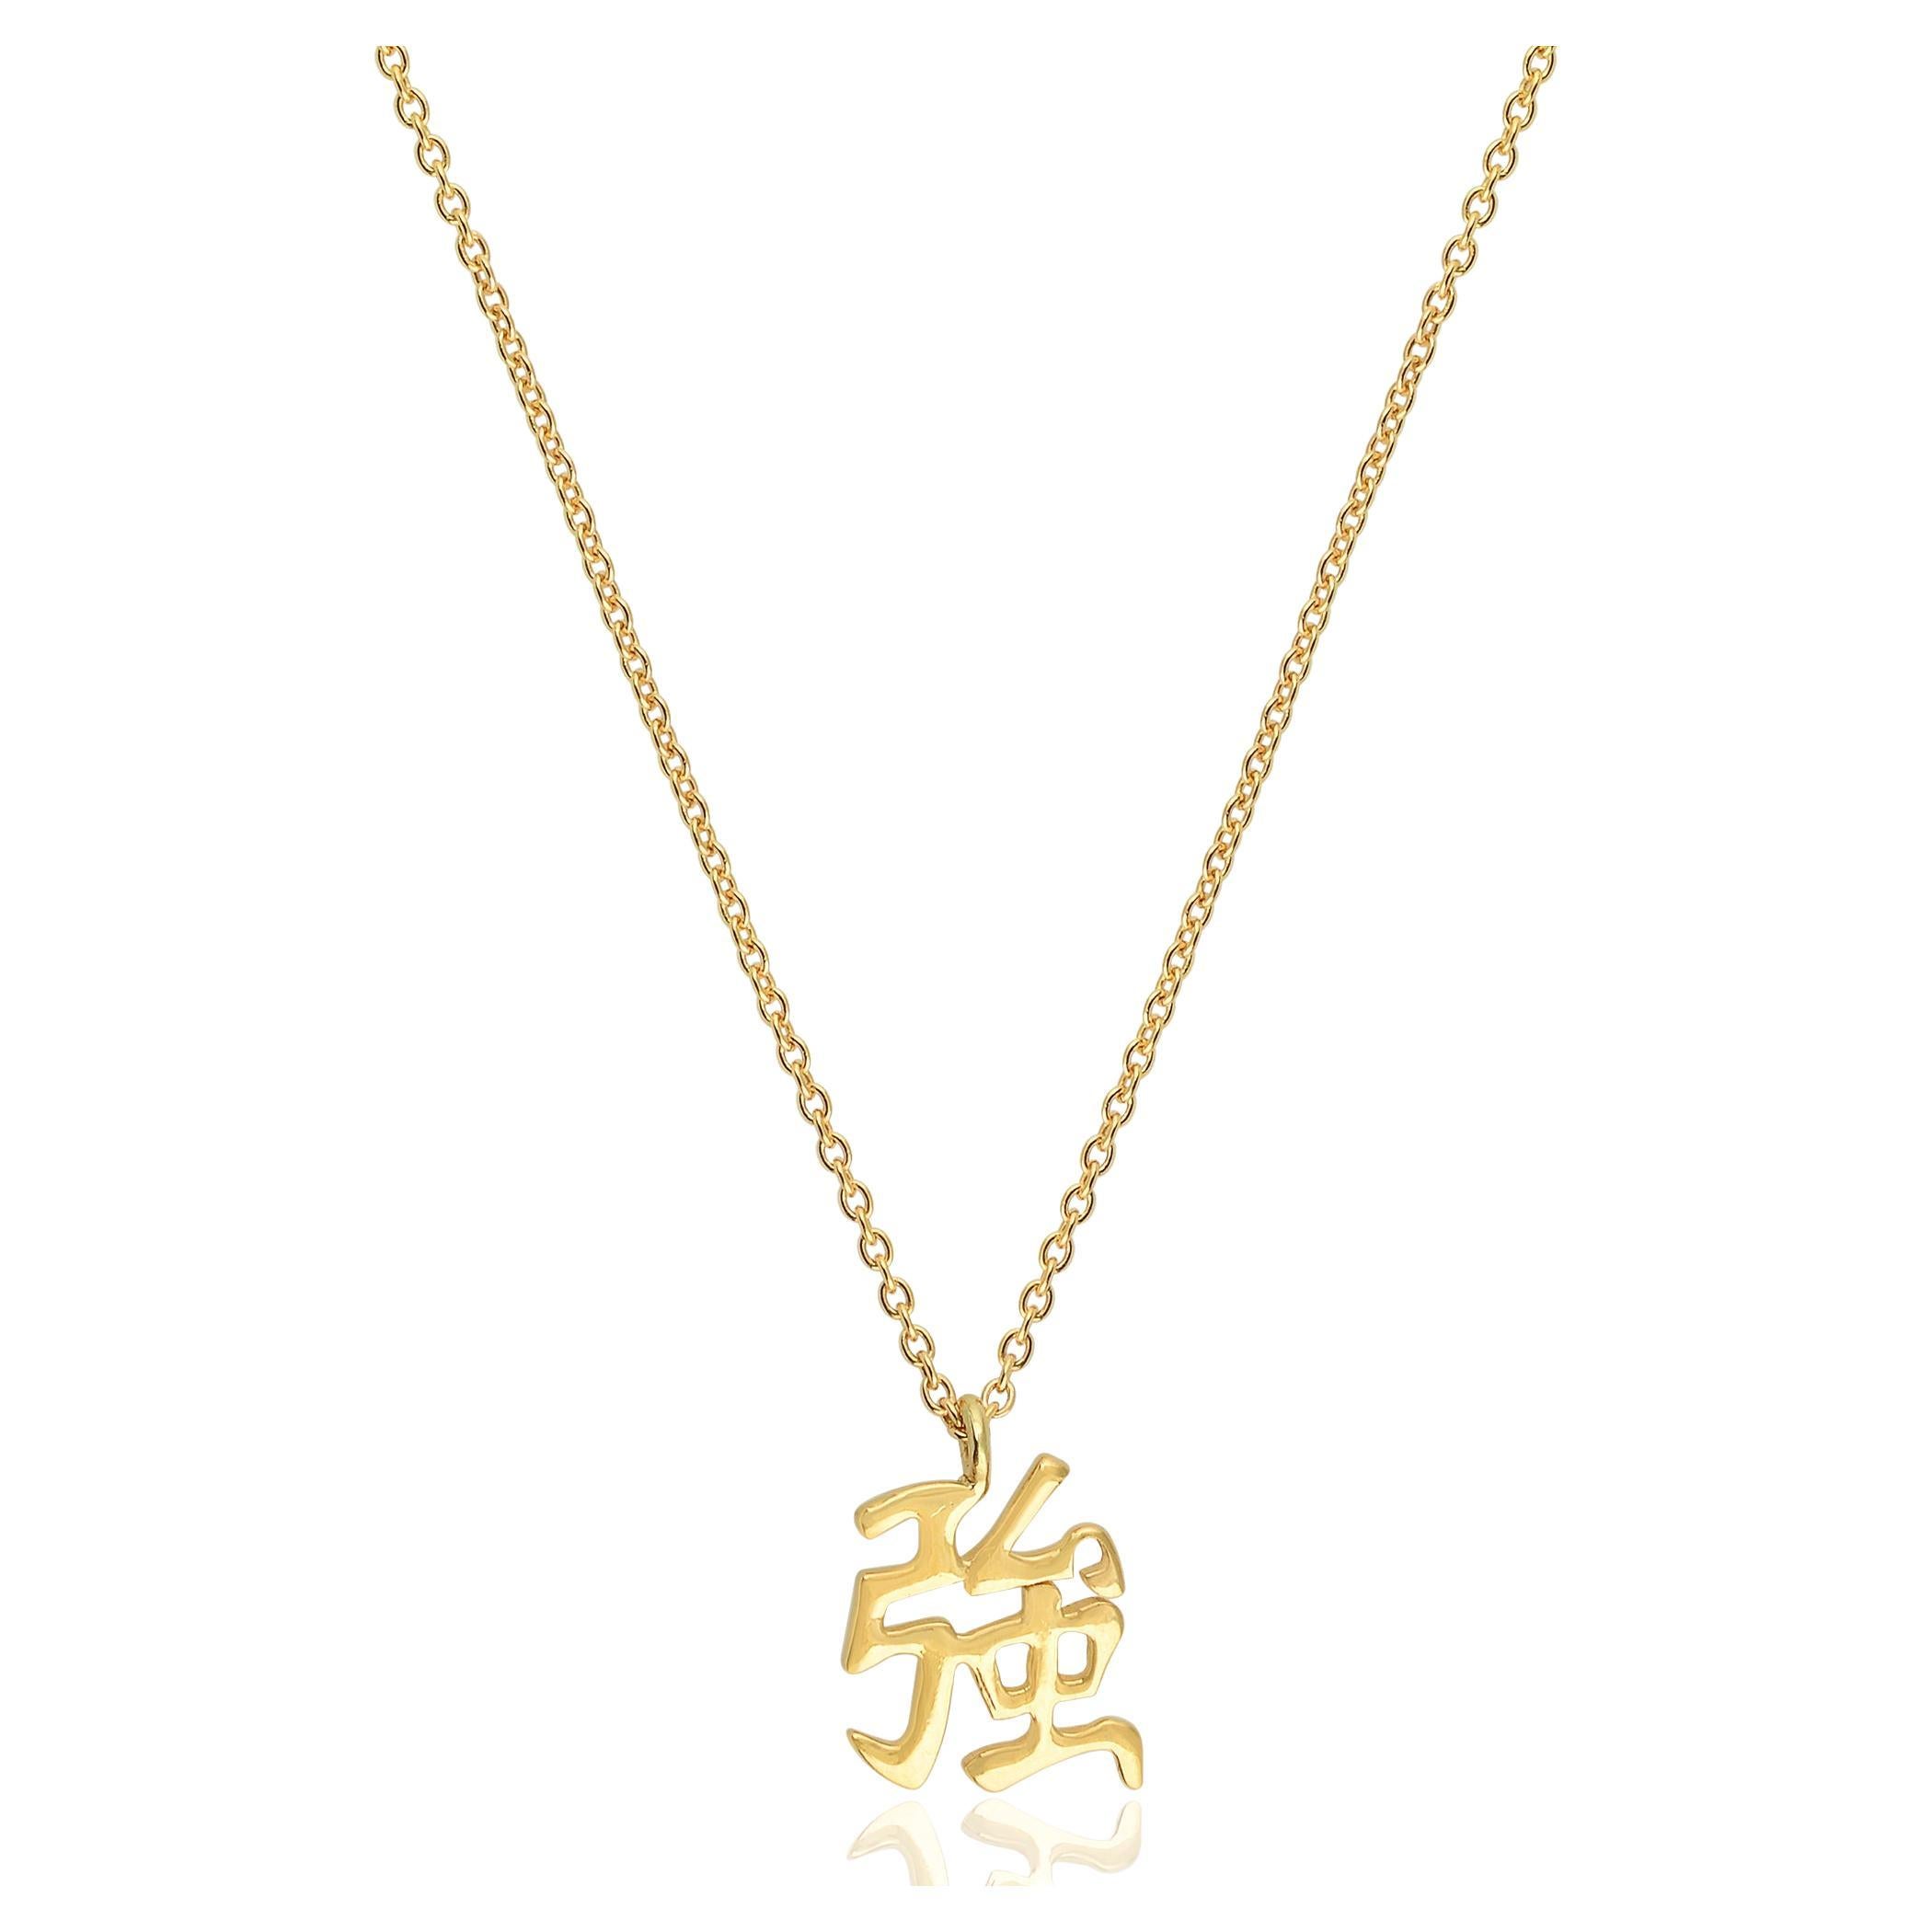 14k Yellow Gold Strength Symbol Japanese Charm Pendant Necklace Fine Jewelry